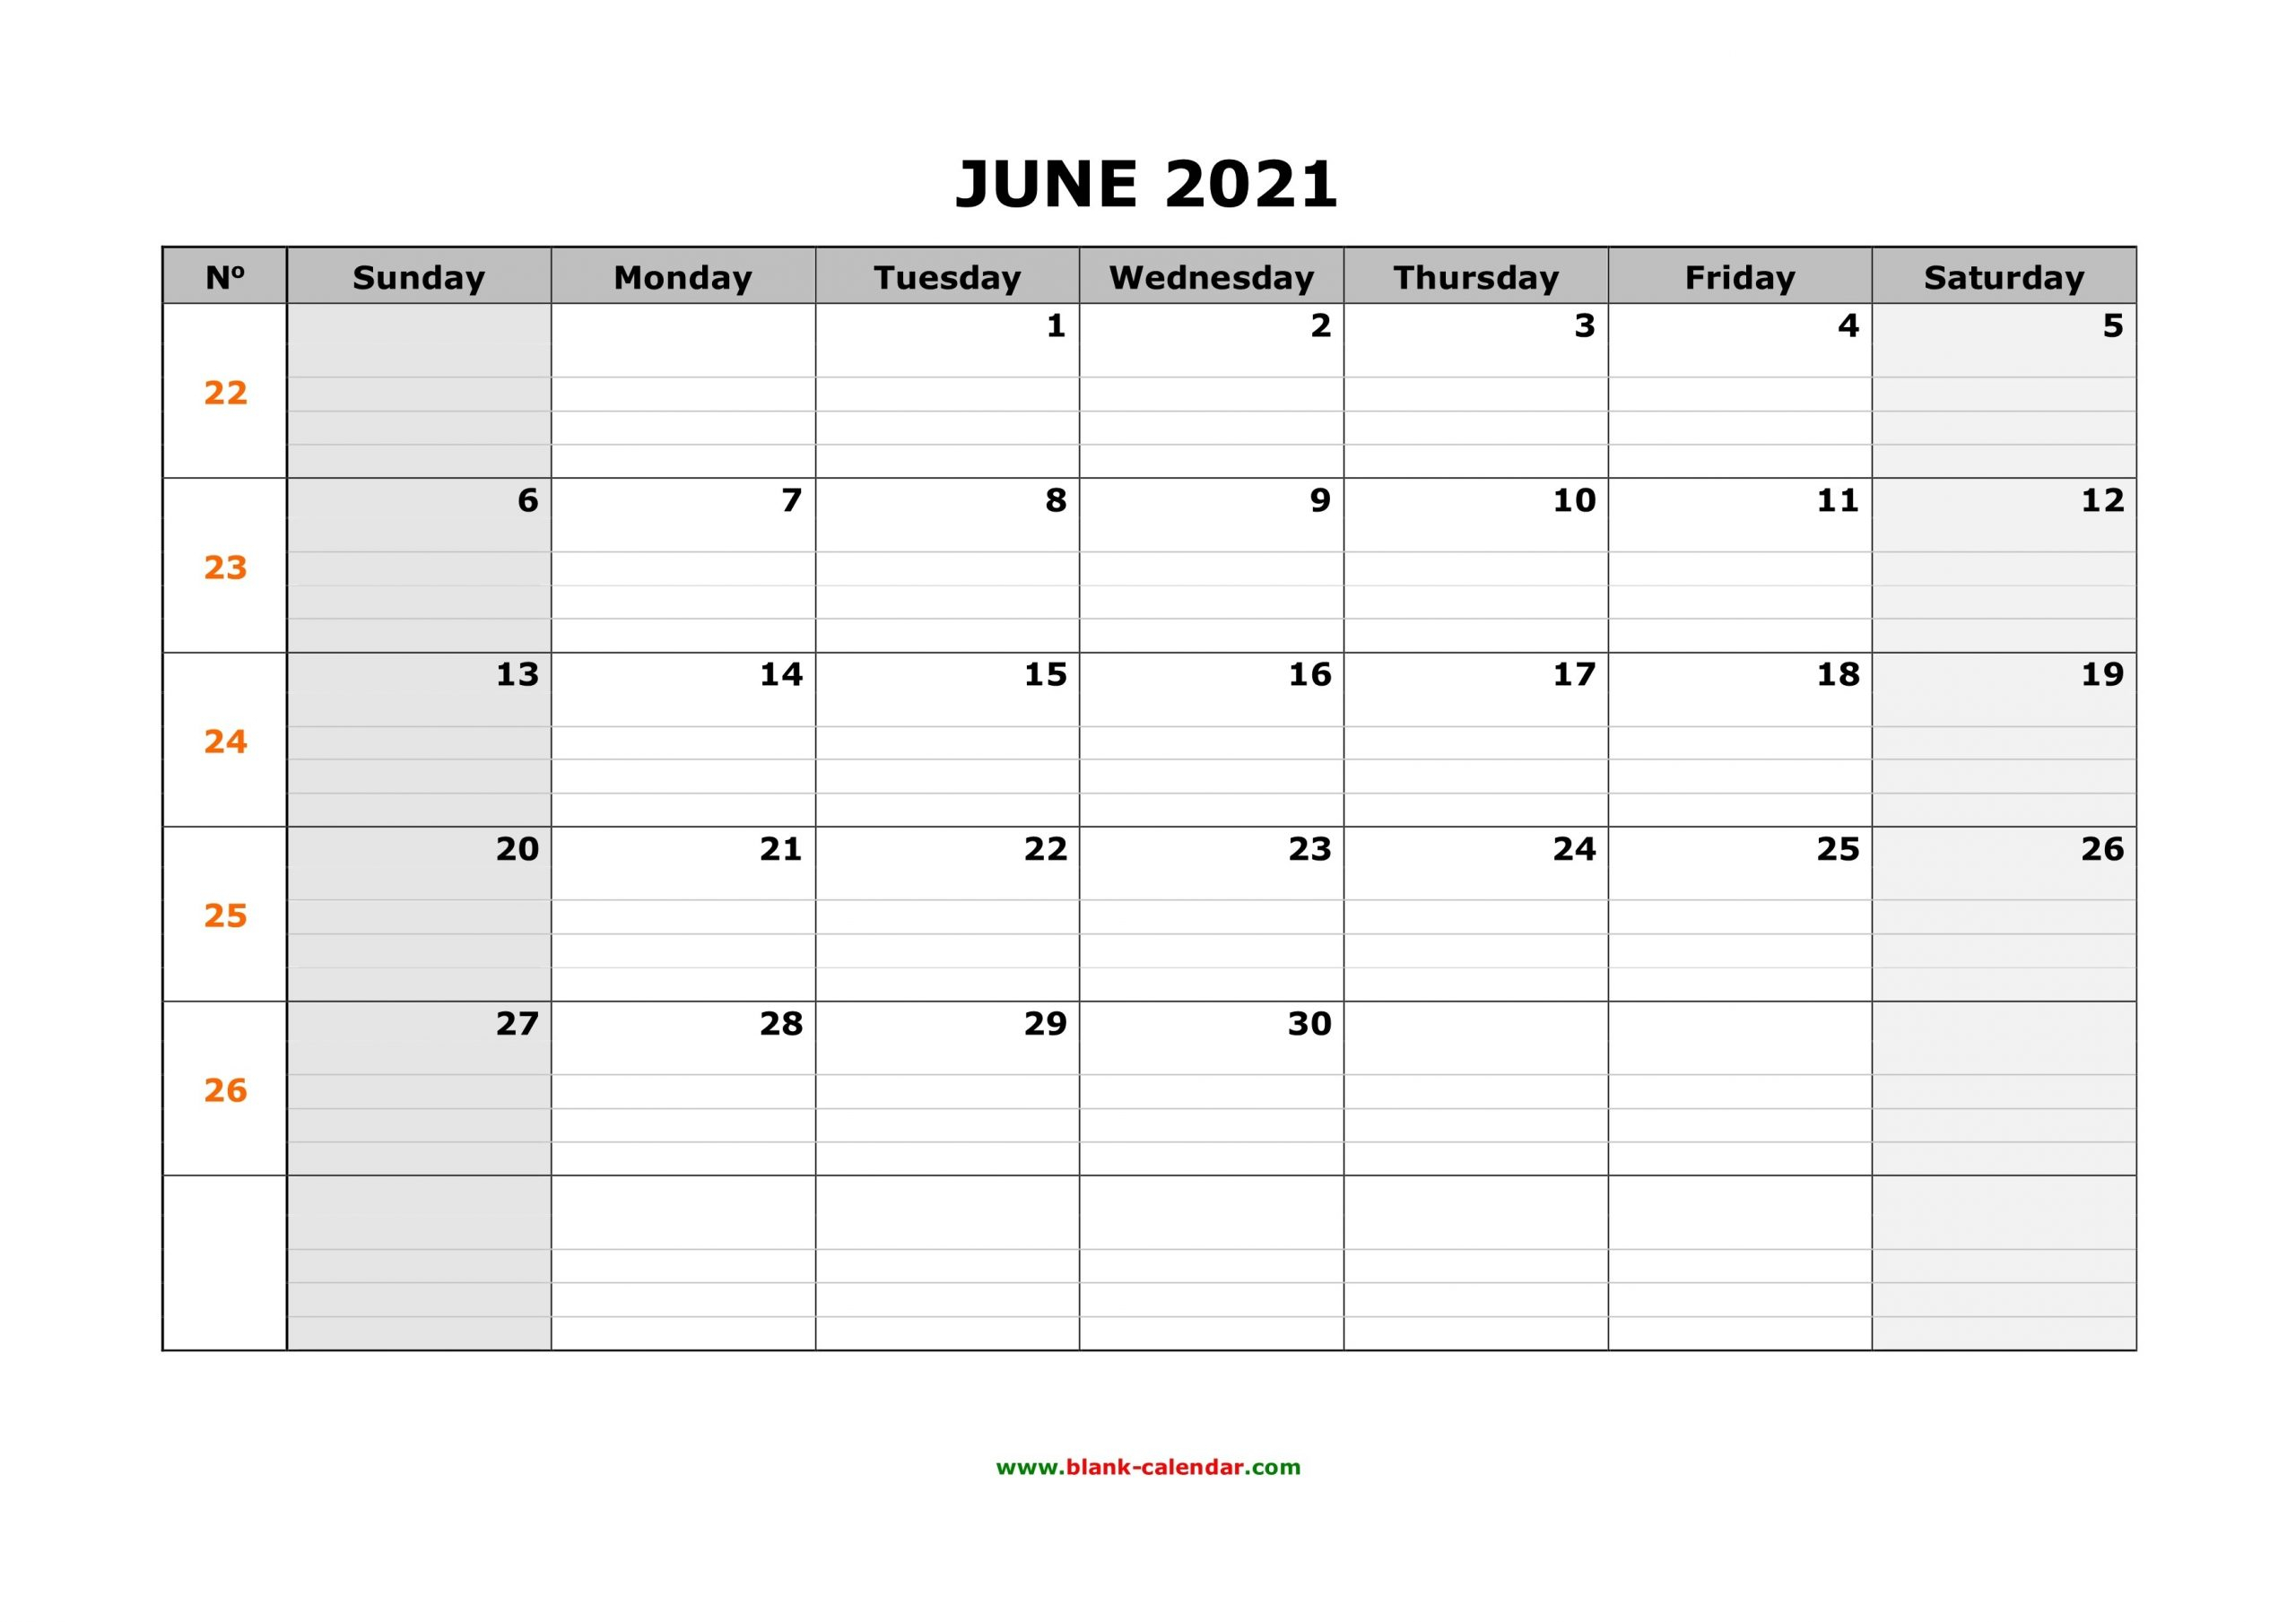 Blank Monthly Calendar 2021 June 2021 With Grid | Calendar regarding Monthly Calendars Free Ruled 2021